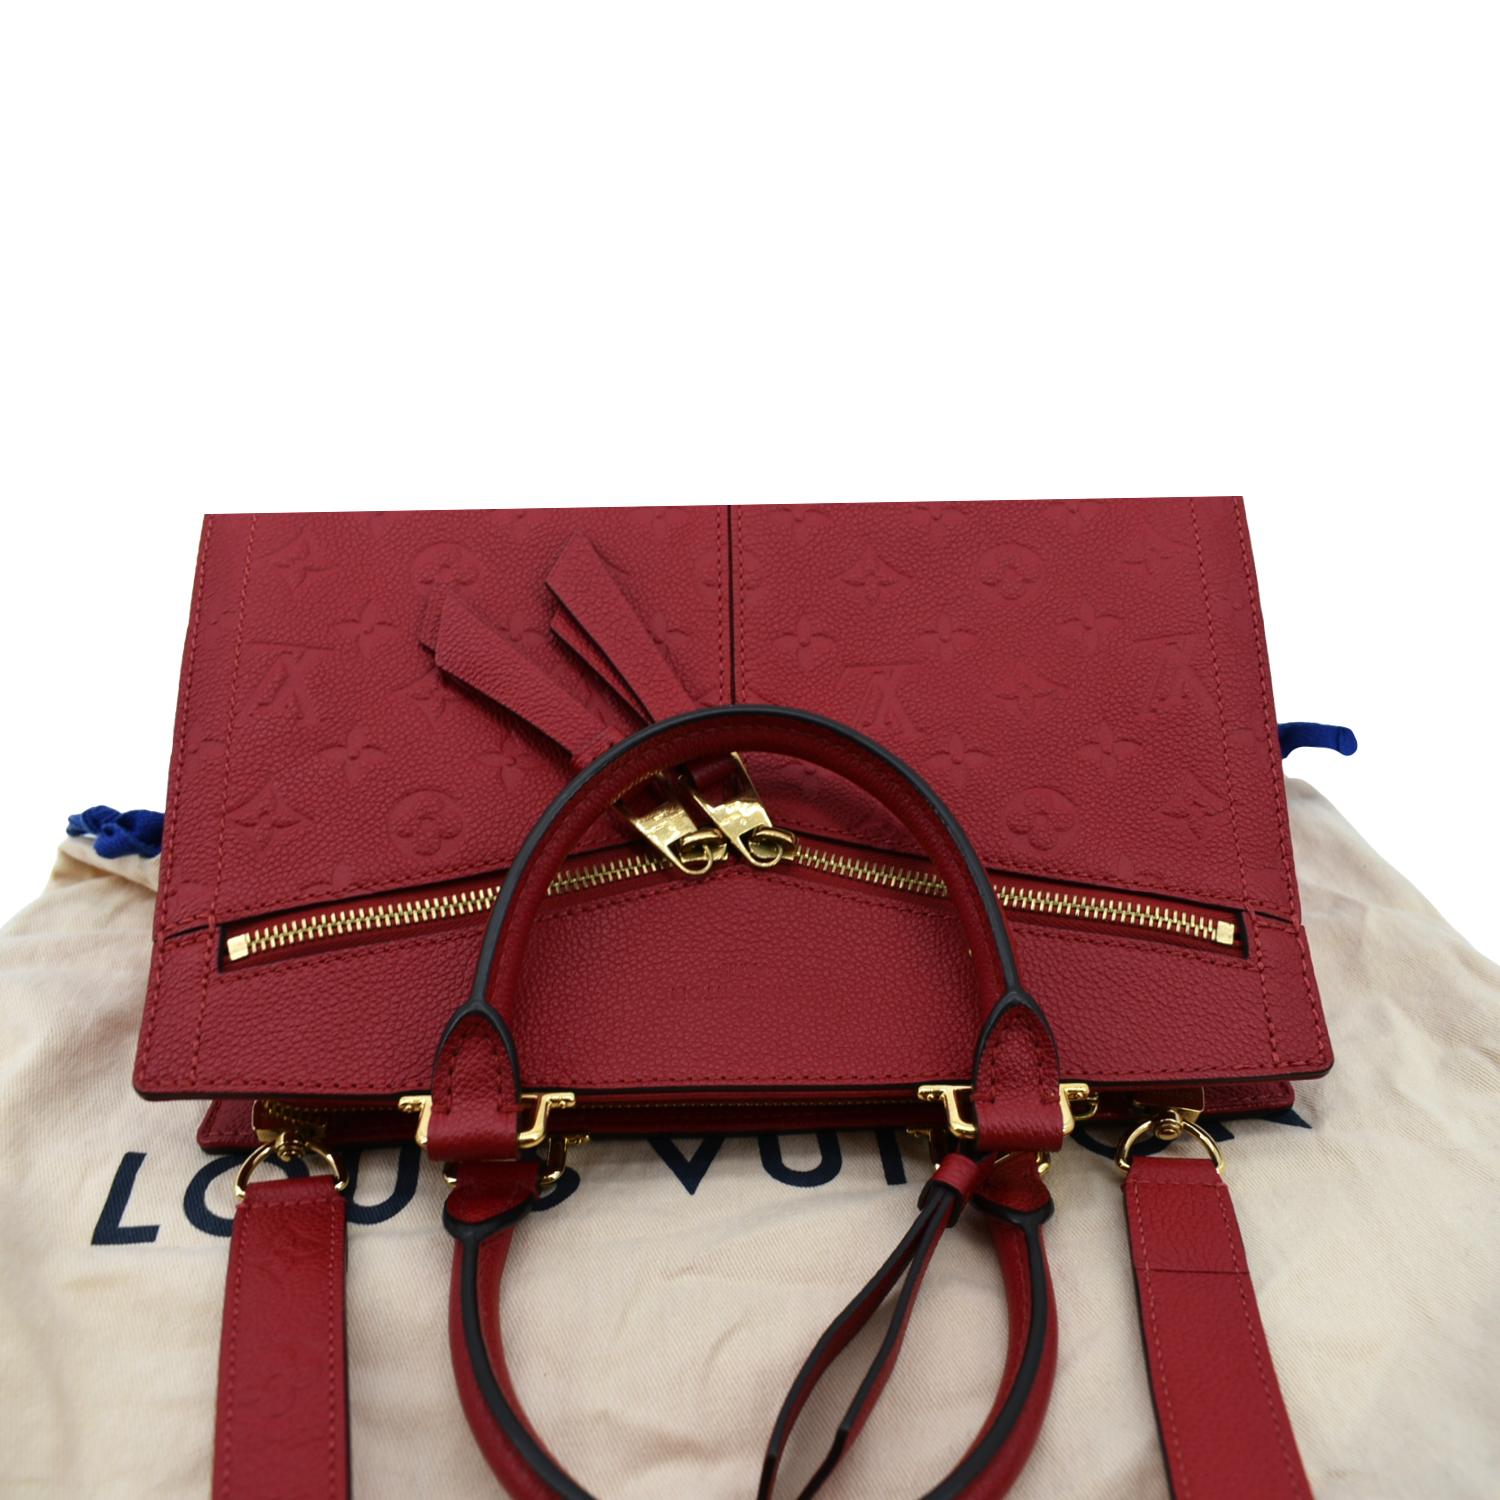 Unboxing My First Louis Vuitton Bag (Sully Monogram Empreinte